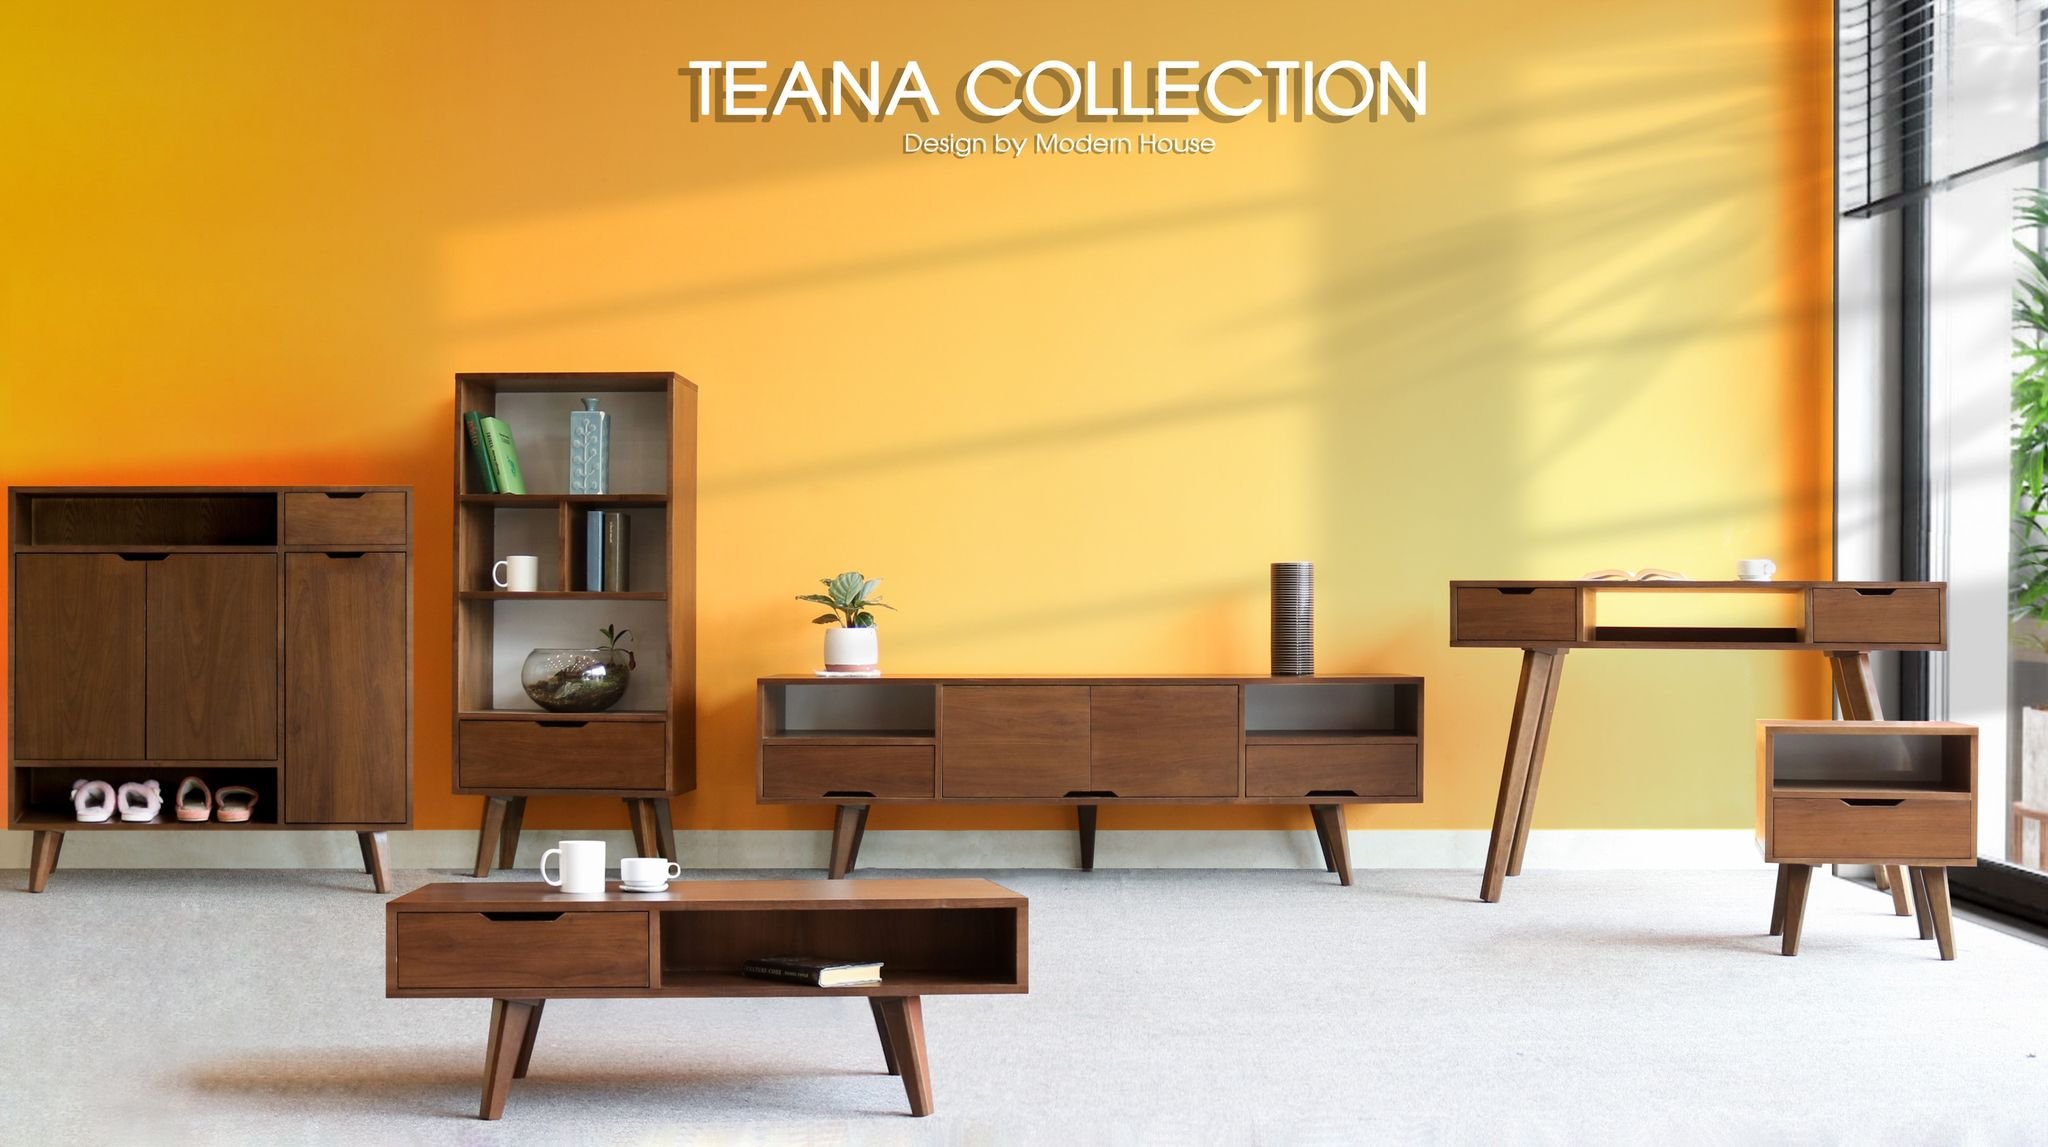 Teana Collection